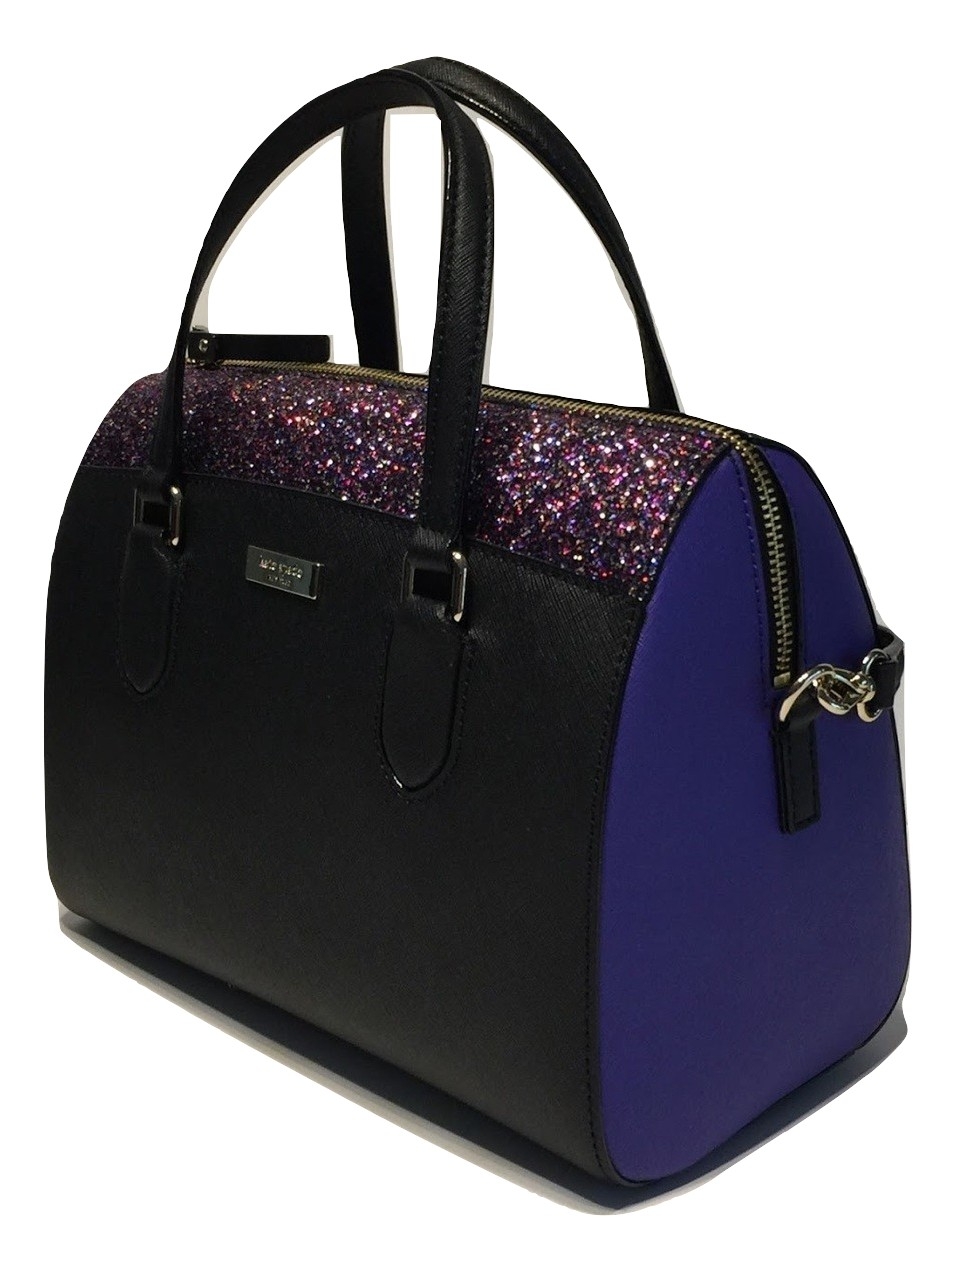 Kate Spade New York Laurel Way Glitter Lanae Handbag WKRU4795